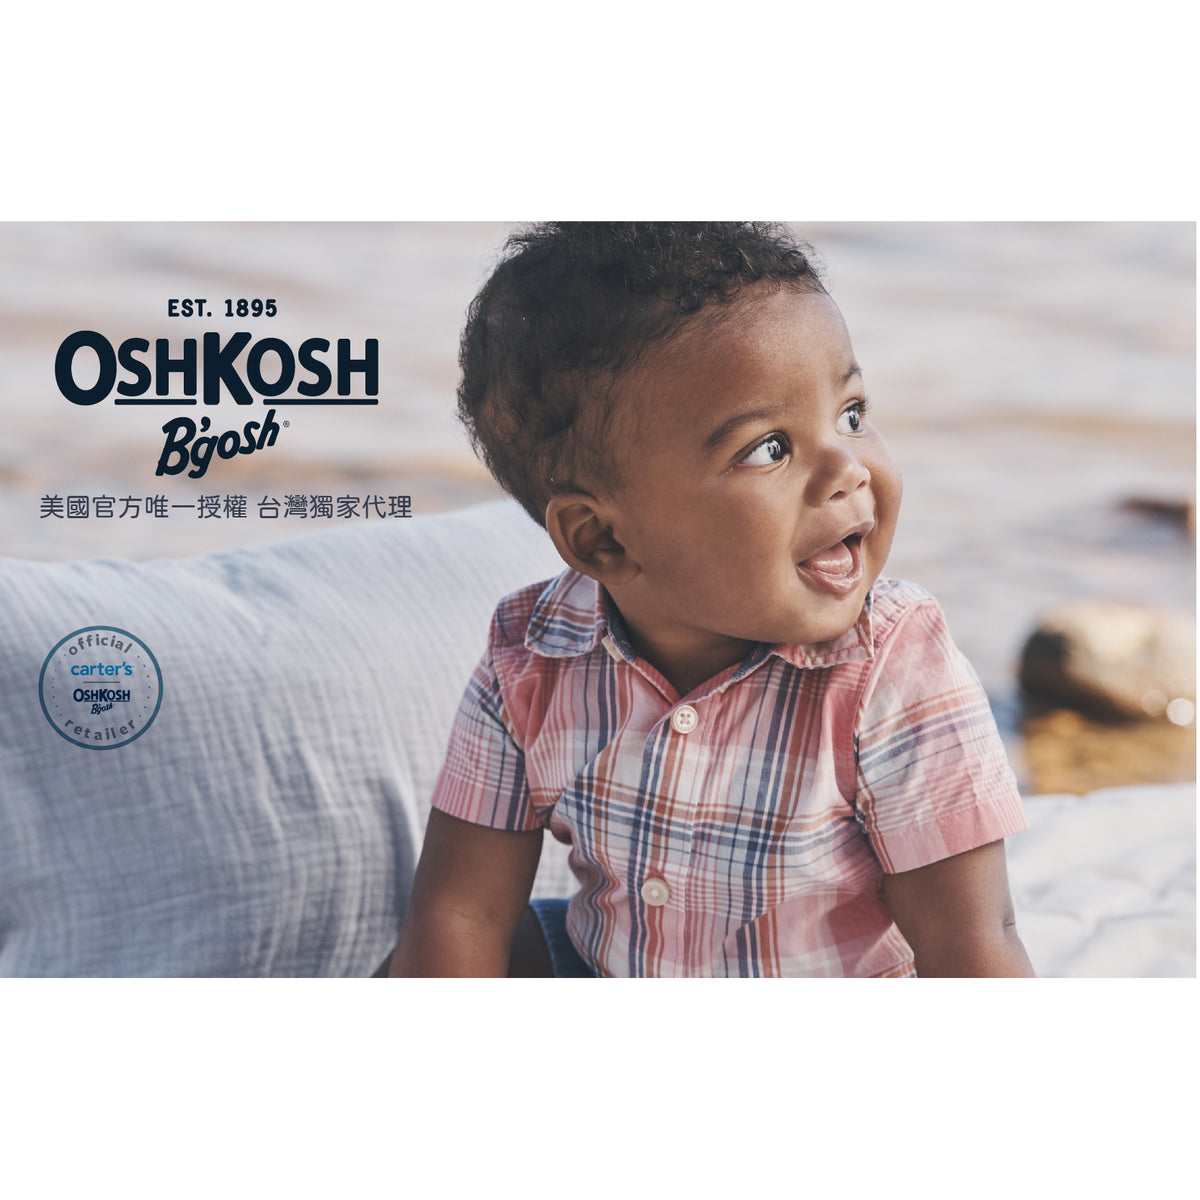 OshKosh Blue Sky Denim Time Suspenders (6M-24M)